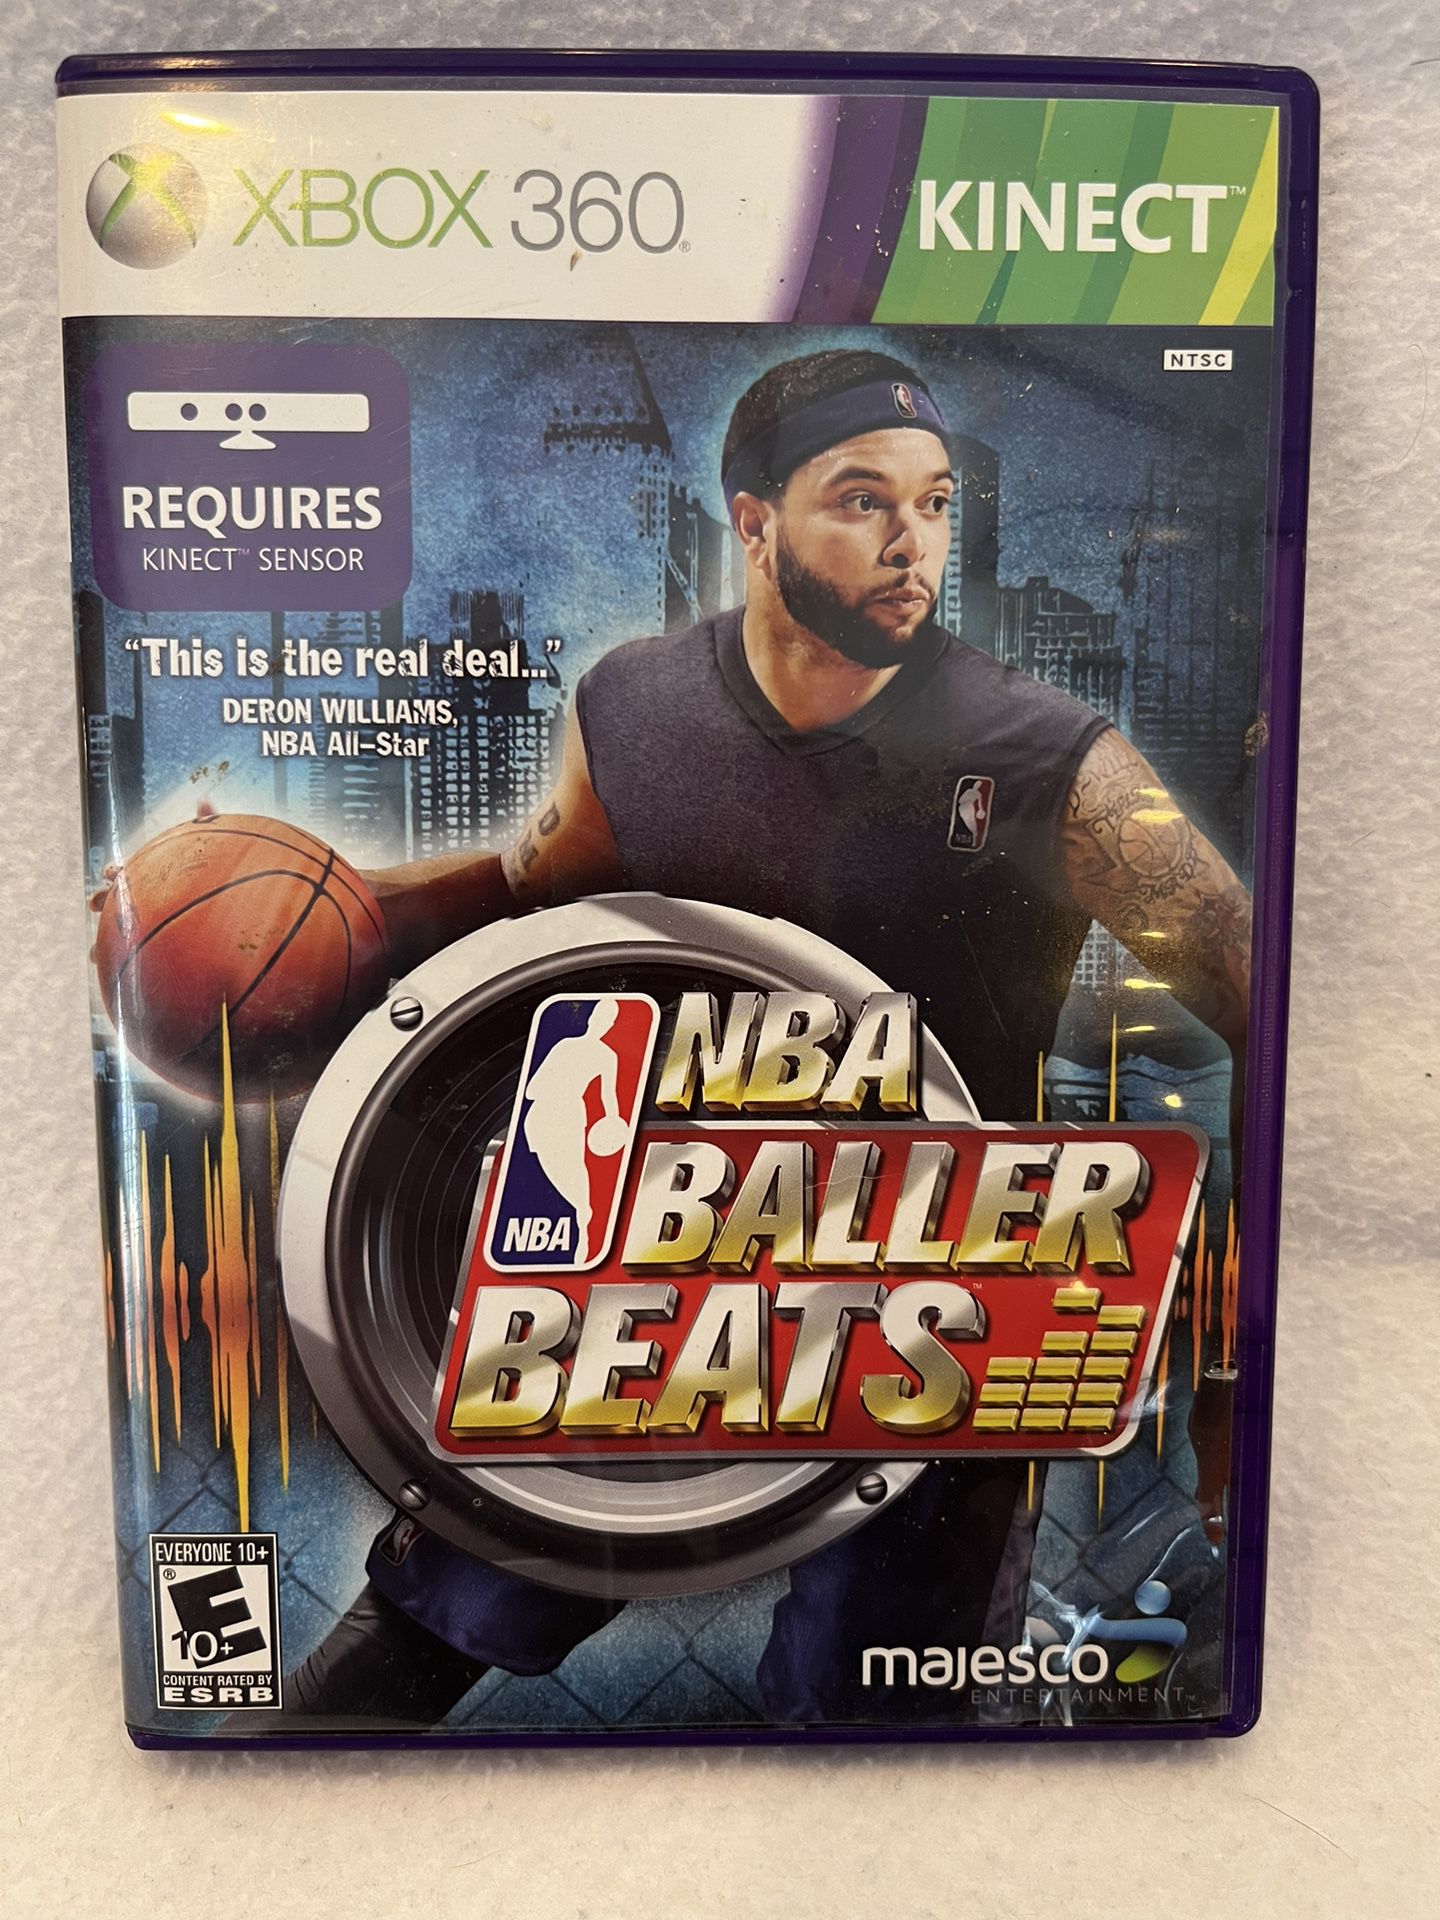  NBA Jam - Xbox 360 : Video Games